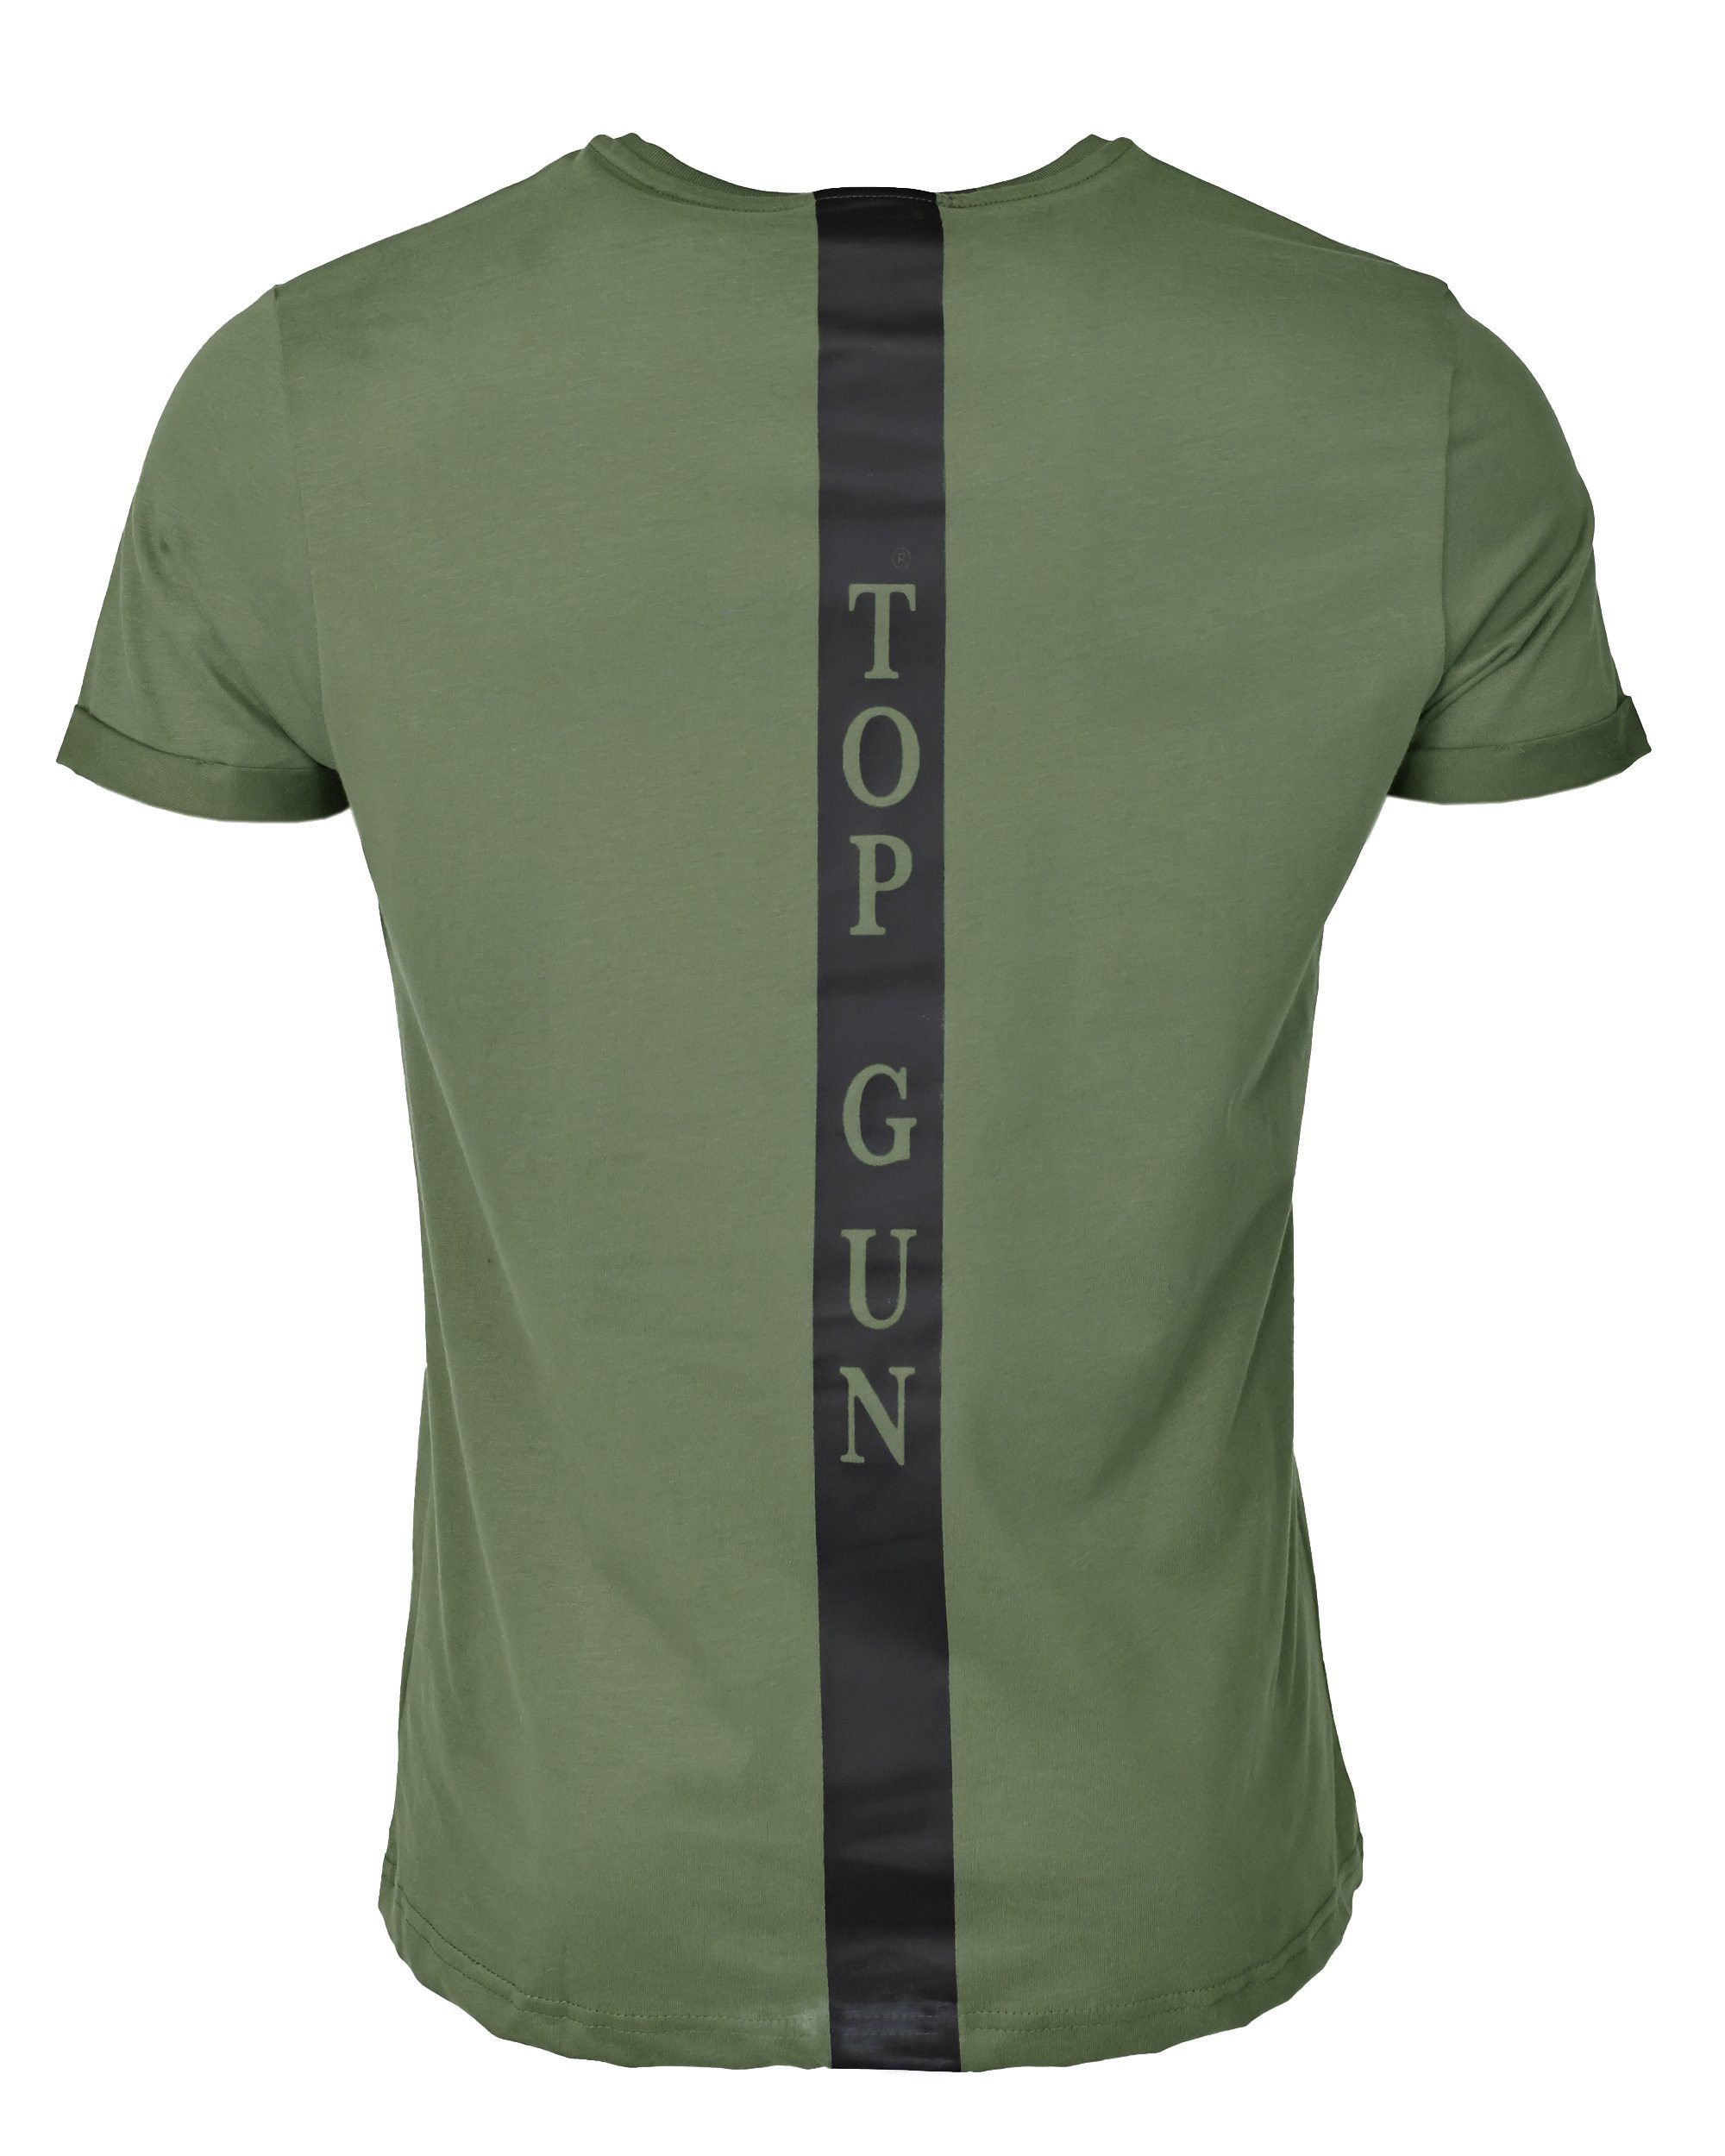 T-Shirt TG20213011 TOP olive GUN